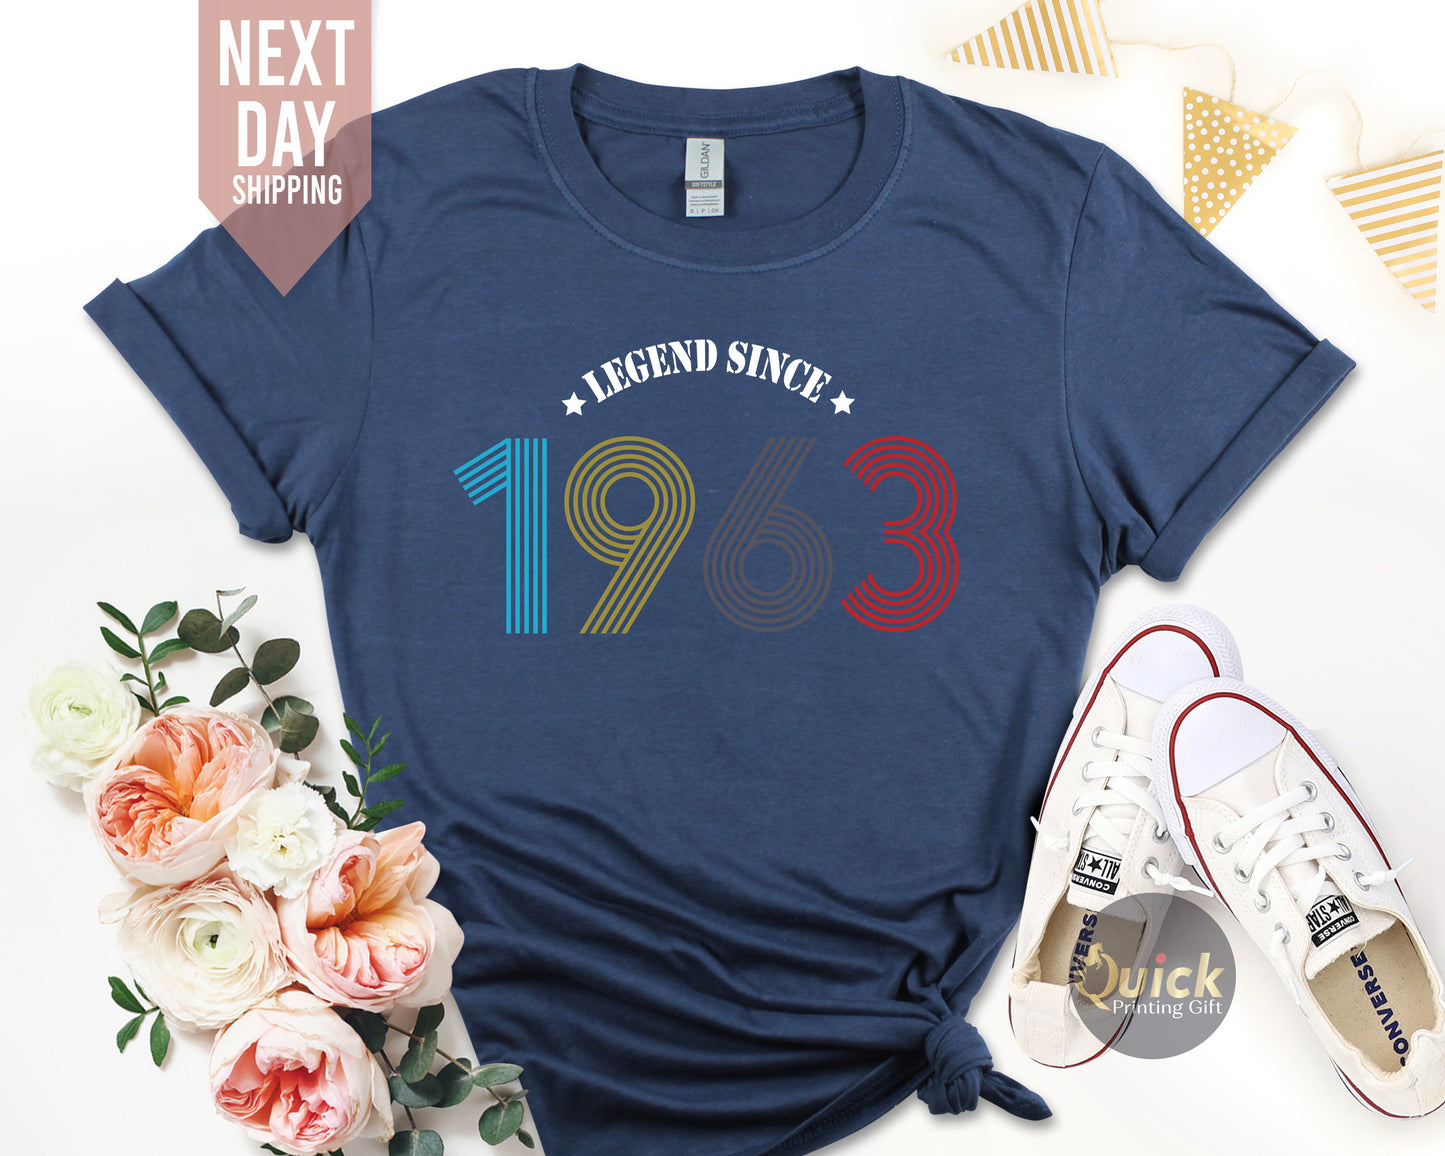 Legend Since 1963 Tshirt, 60th Birthday Tshirt, 60th Birthday Gifts for Women, Vintage Birthday Gifts, Custom Birthday Gift